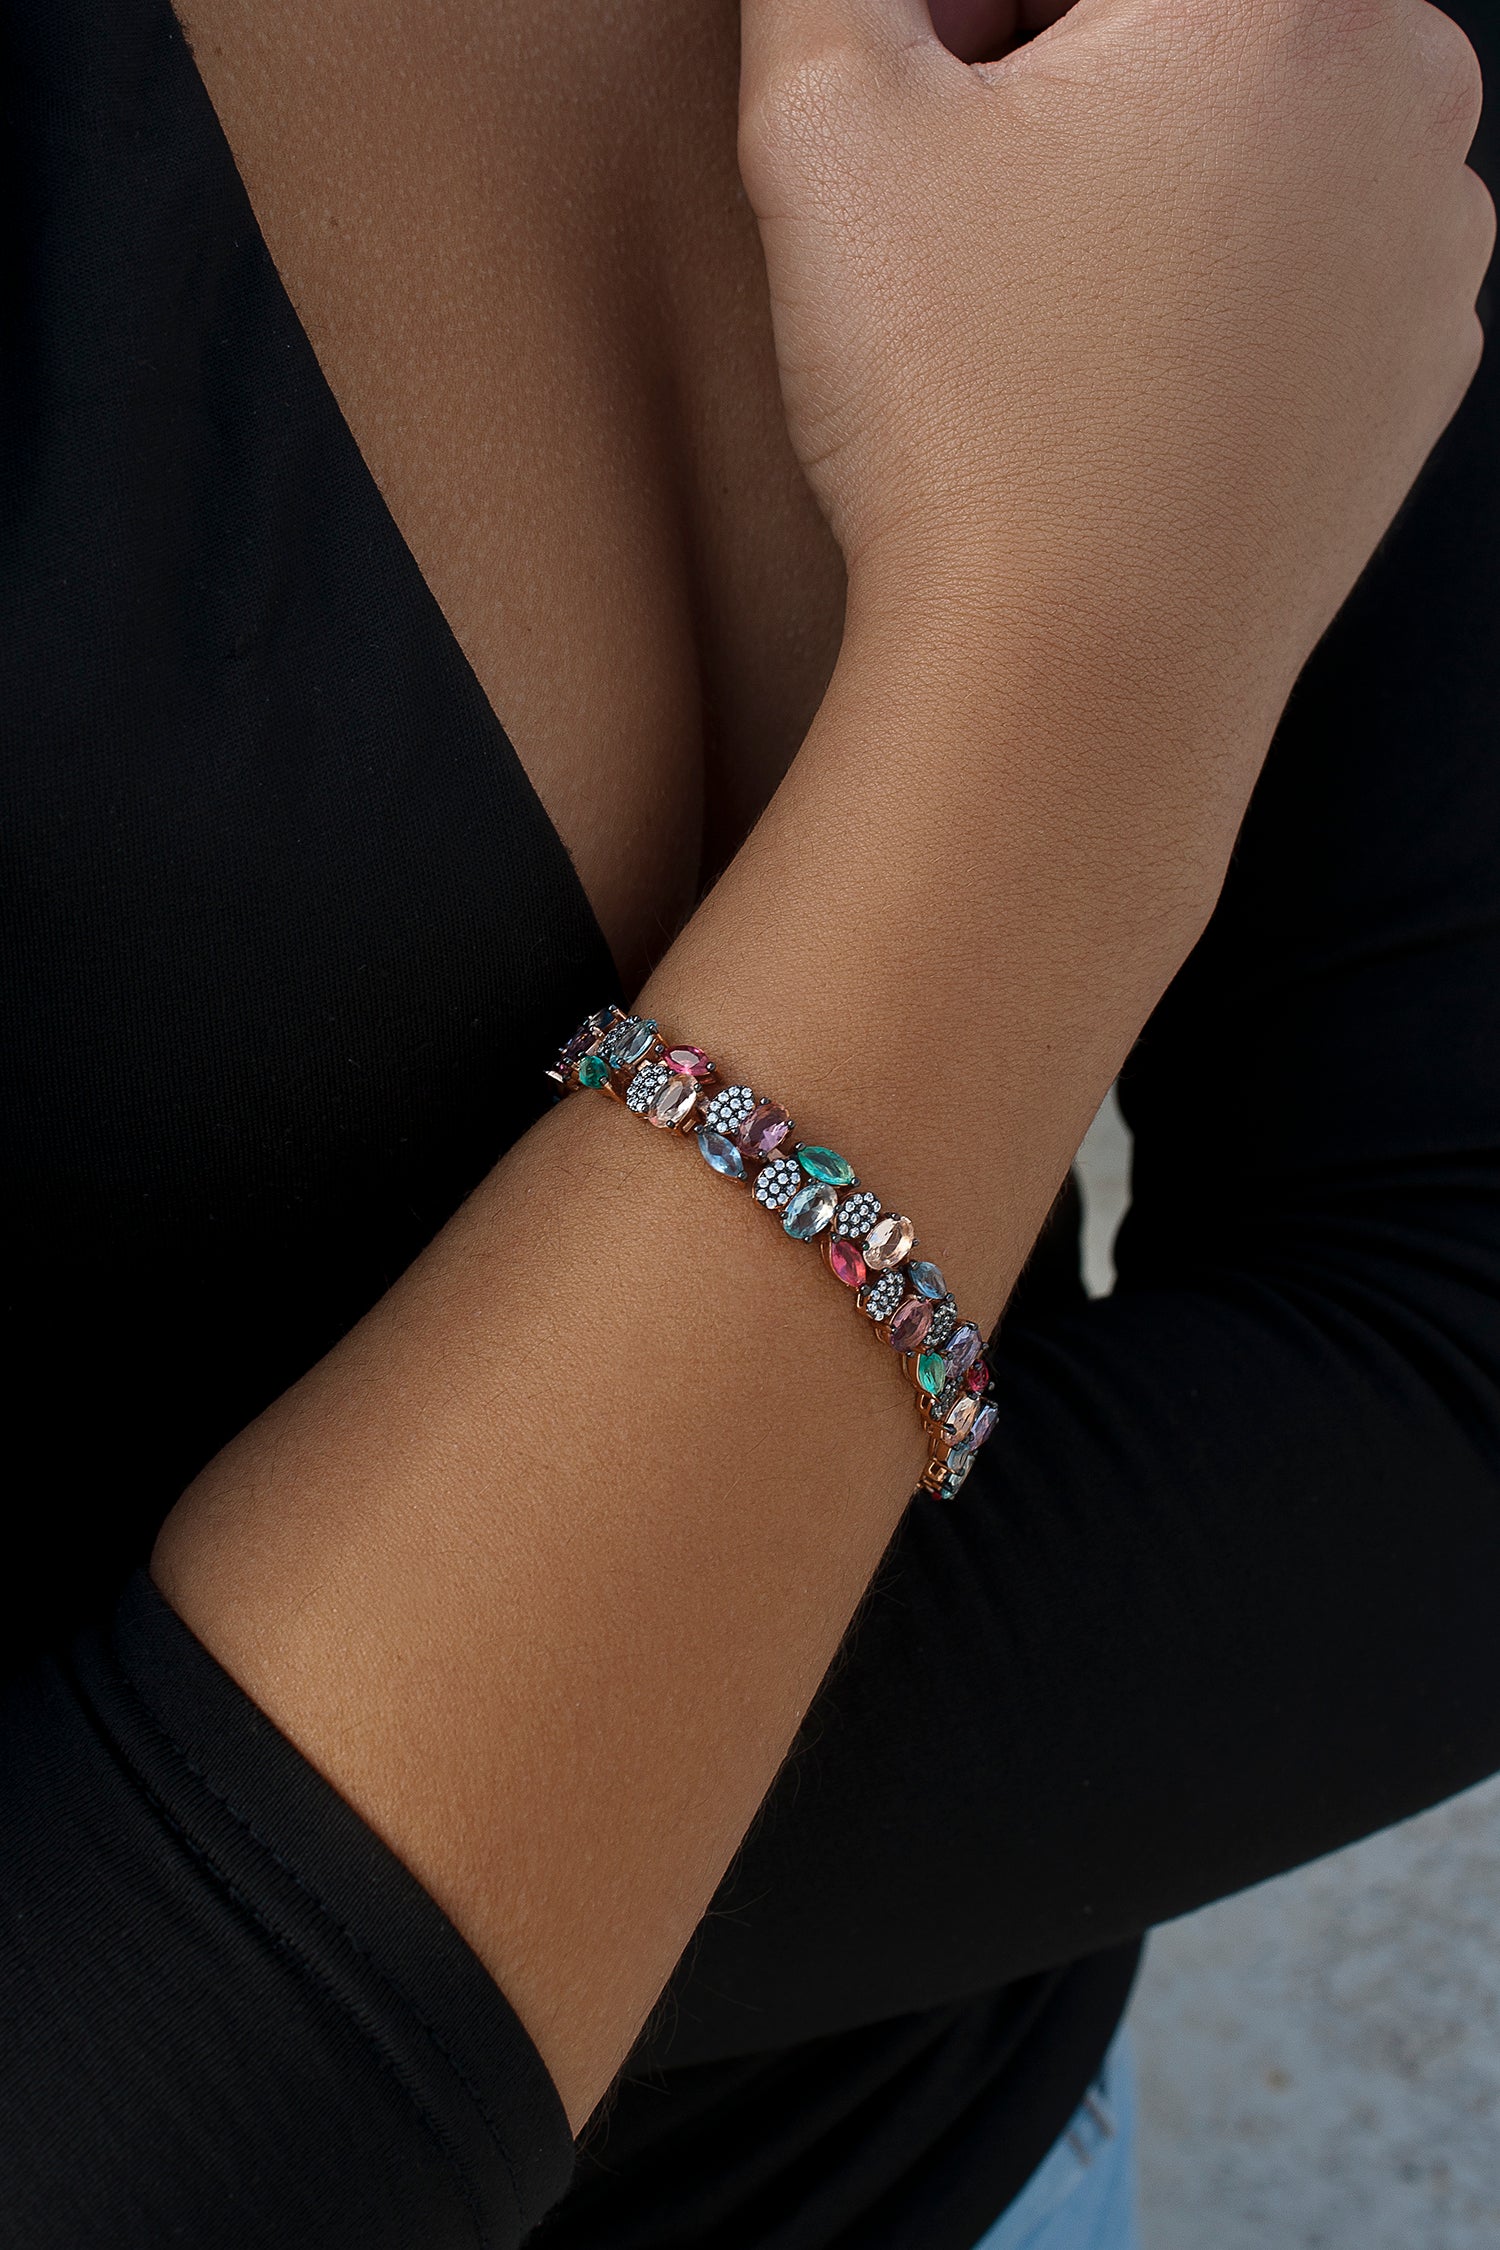 Bracelet - Bracelets with stones in brilliant tones and zircons